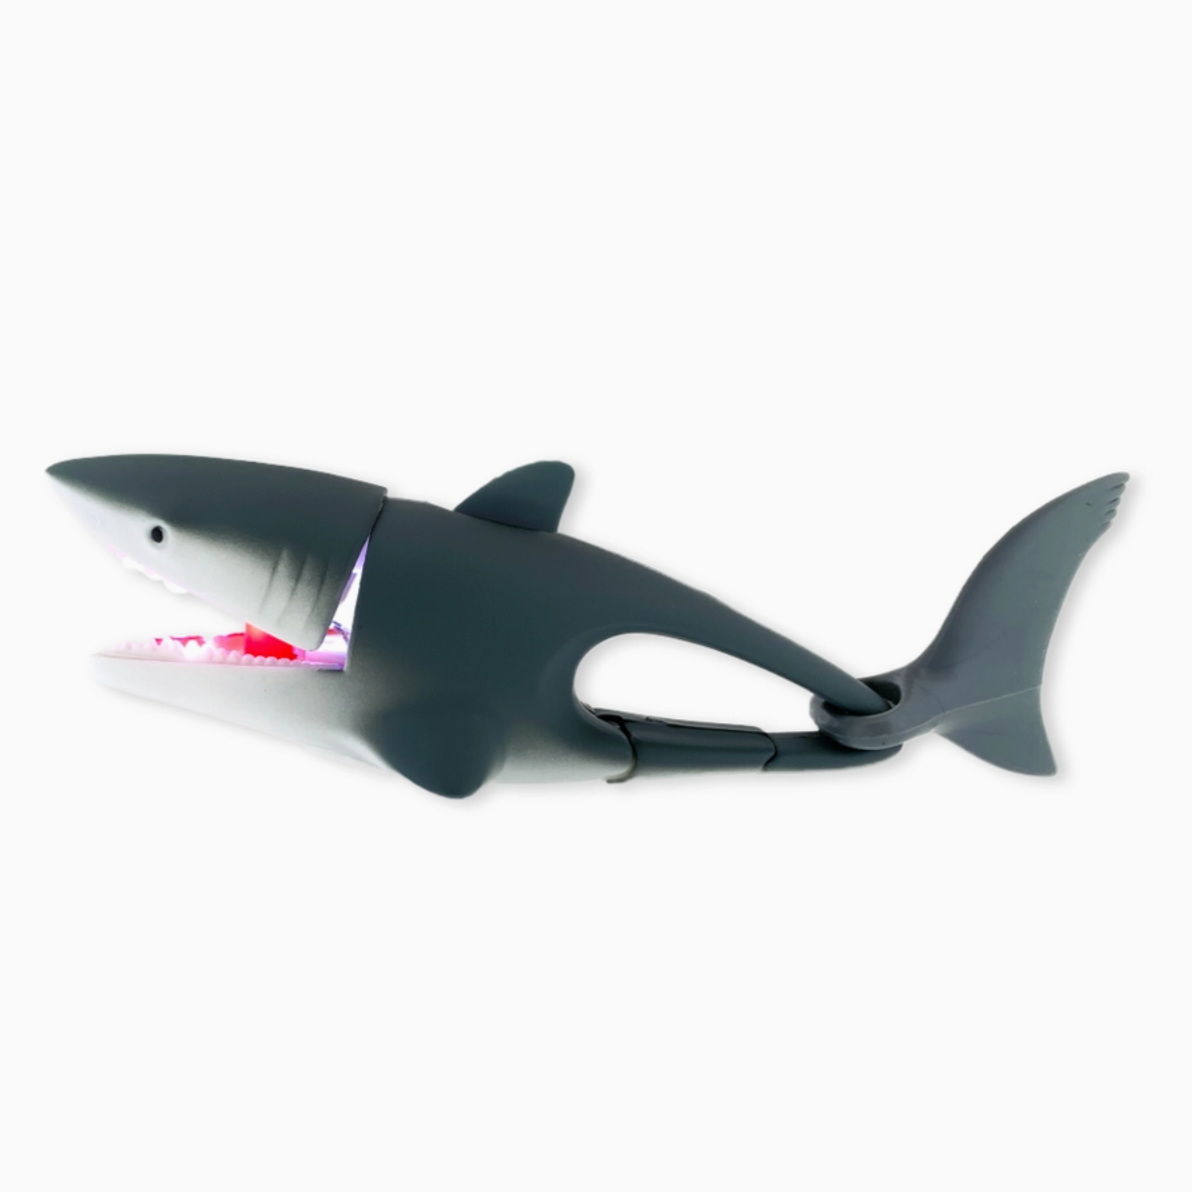 Lifelight Animal Carabiner Flashlight - Shark